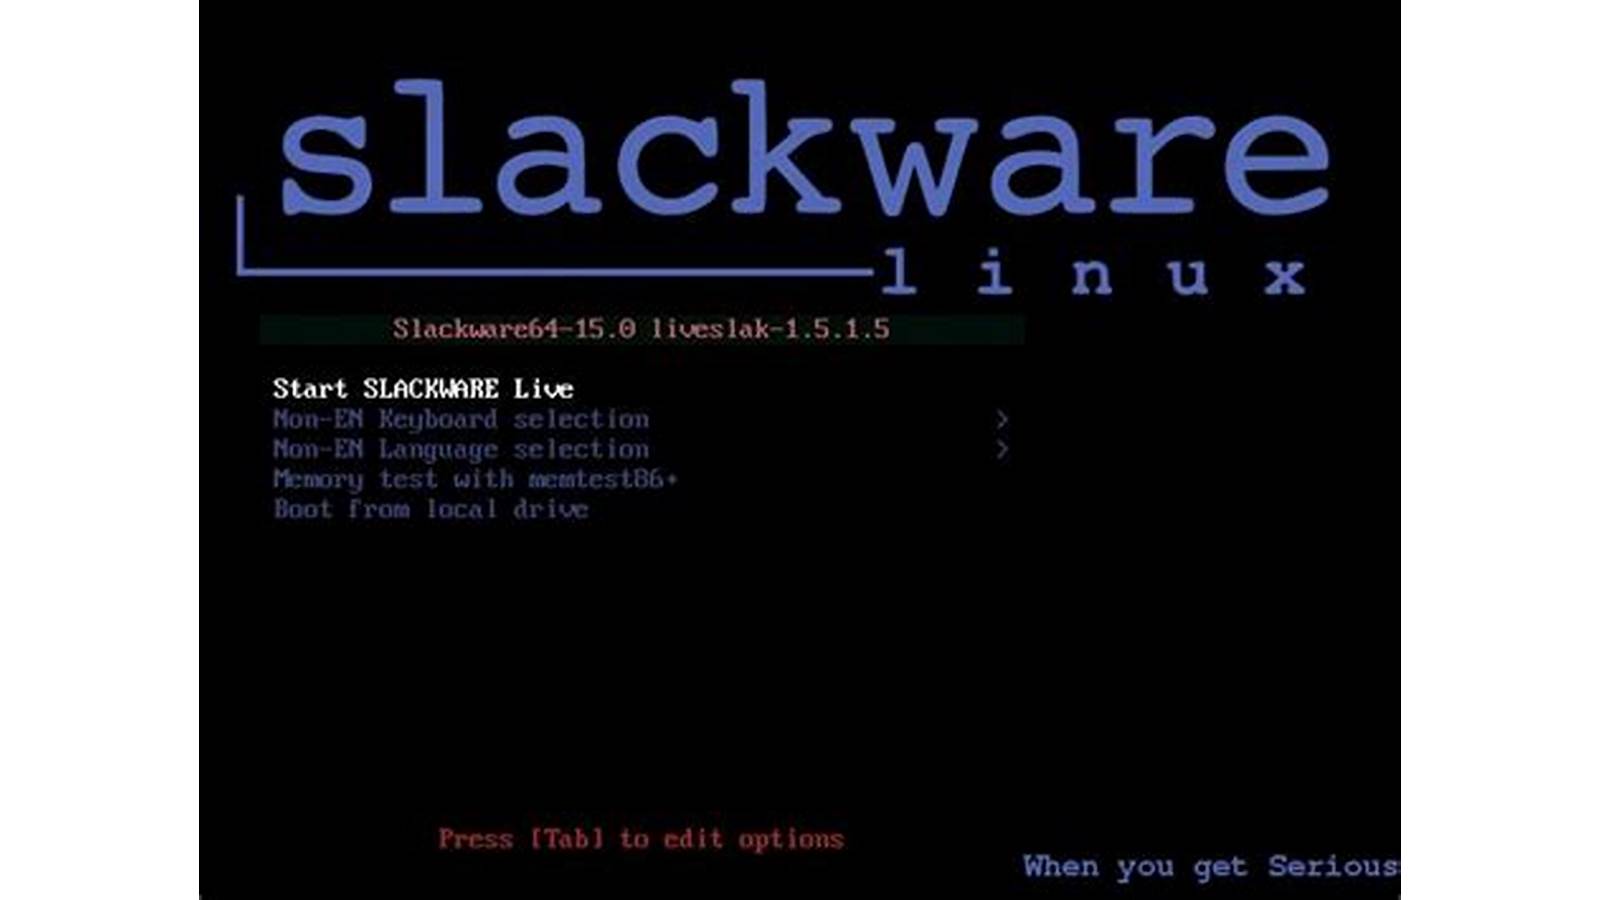 Installing Slackware on a Single System